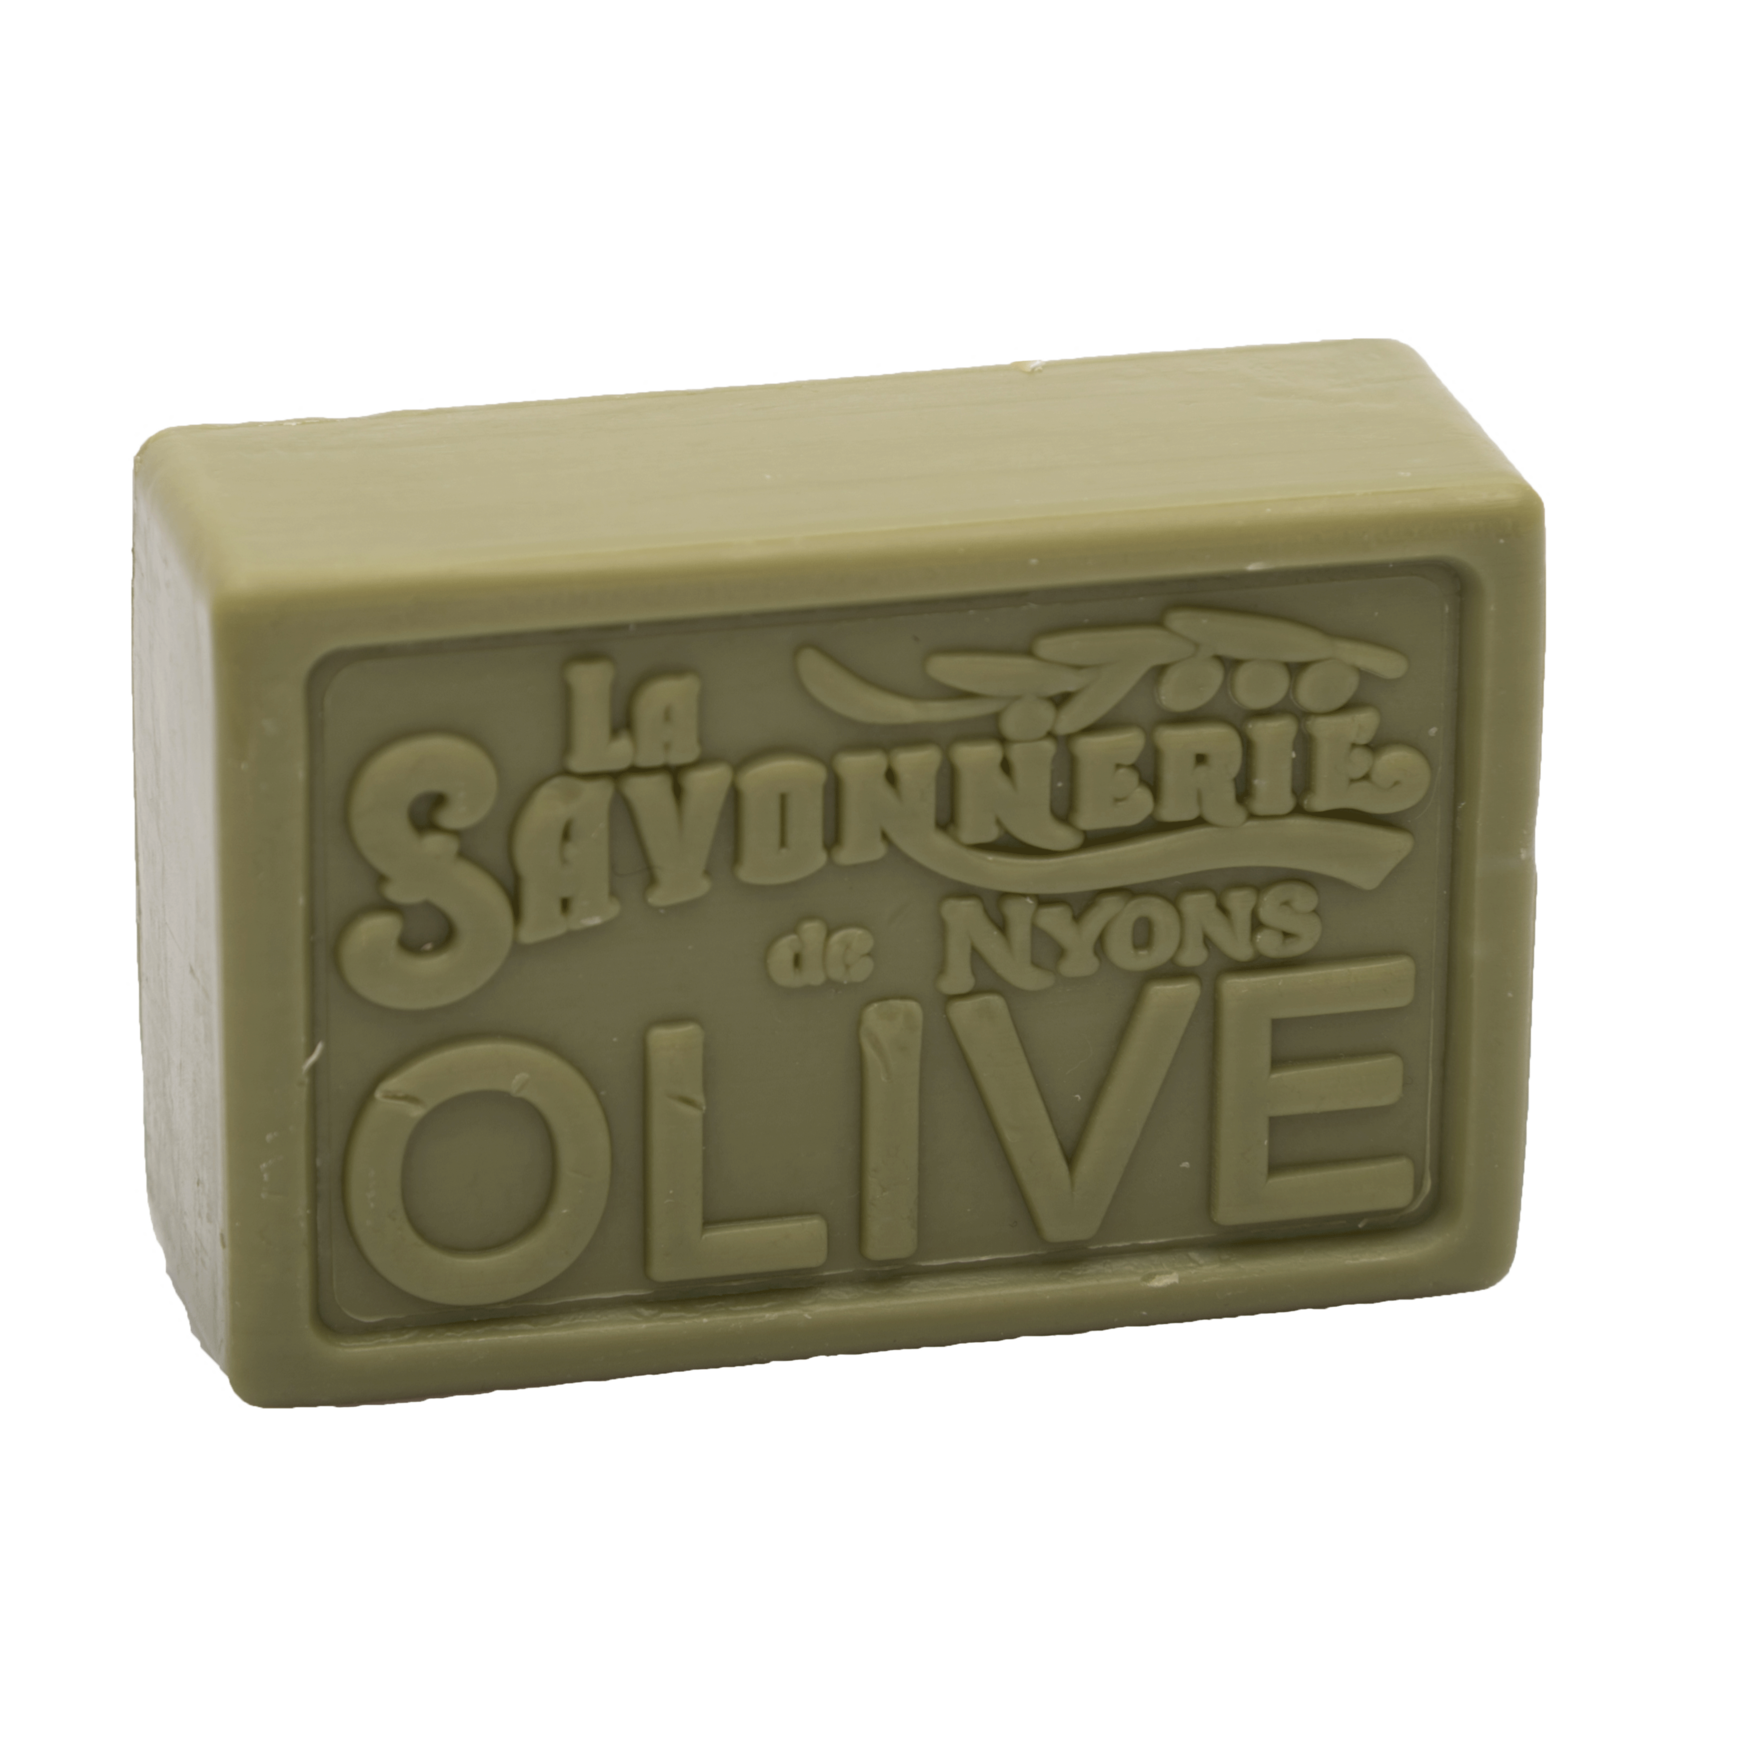 Green bar of soap reading La Savonnerie de Nyons Olive.